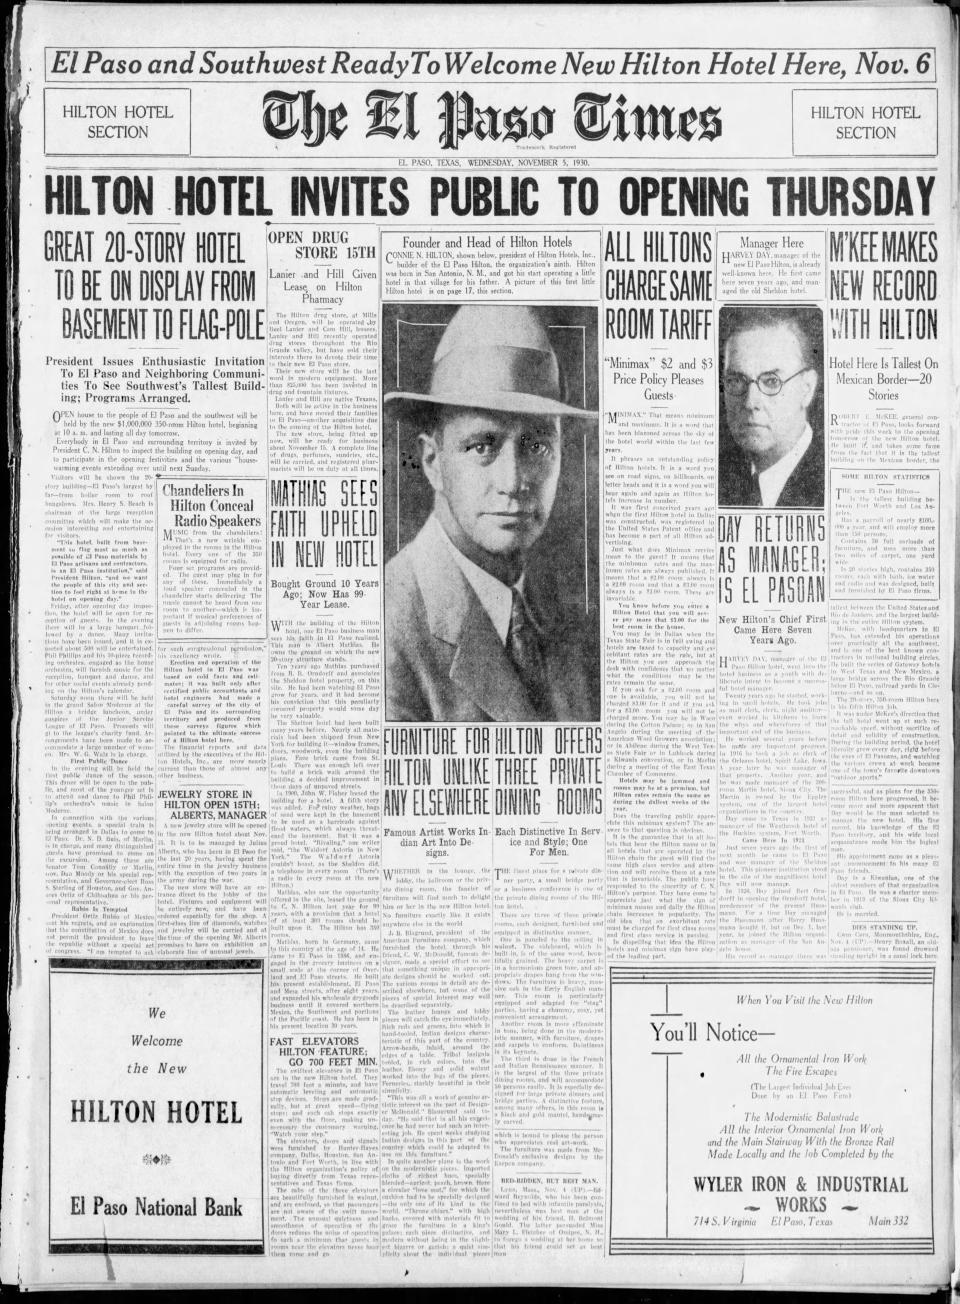 Nov. 5, 1930 Hilton Hotel invites public to opening Thursday